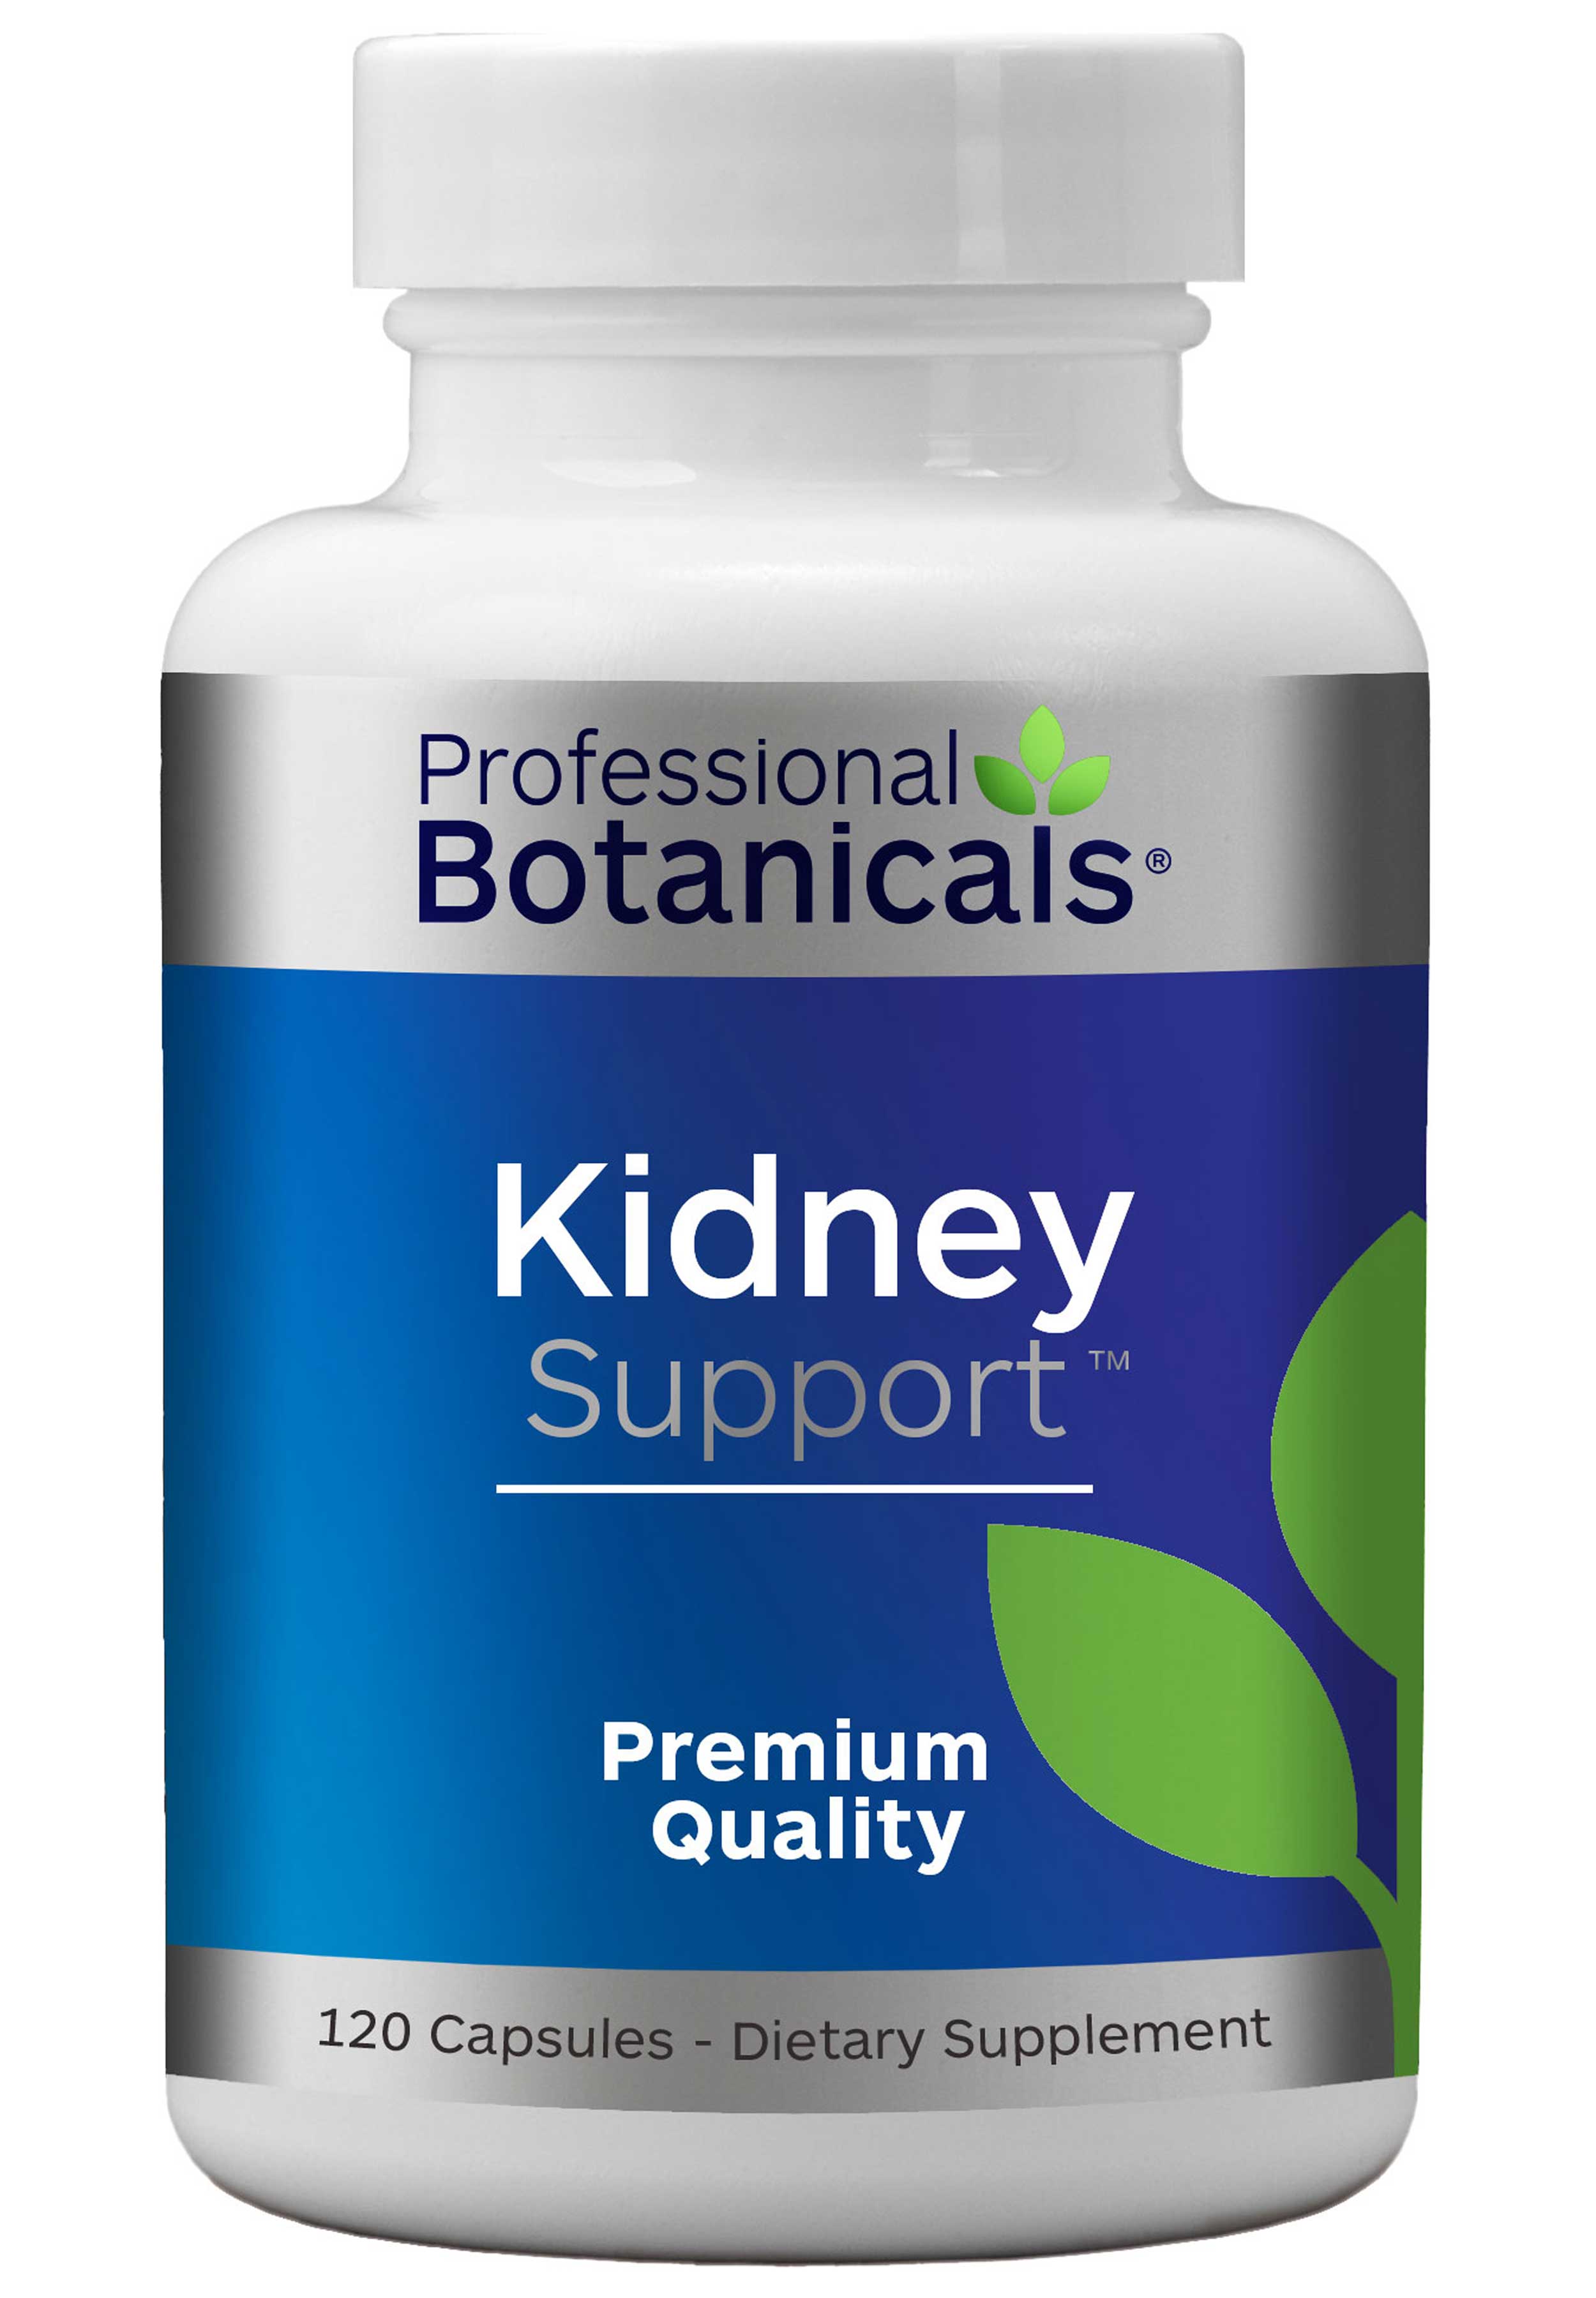 Professional Botanicals Kidney Support